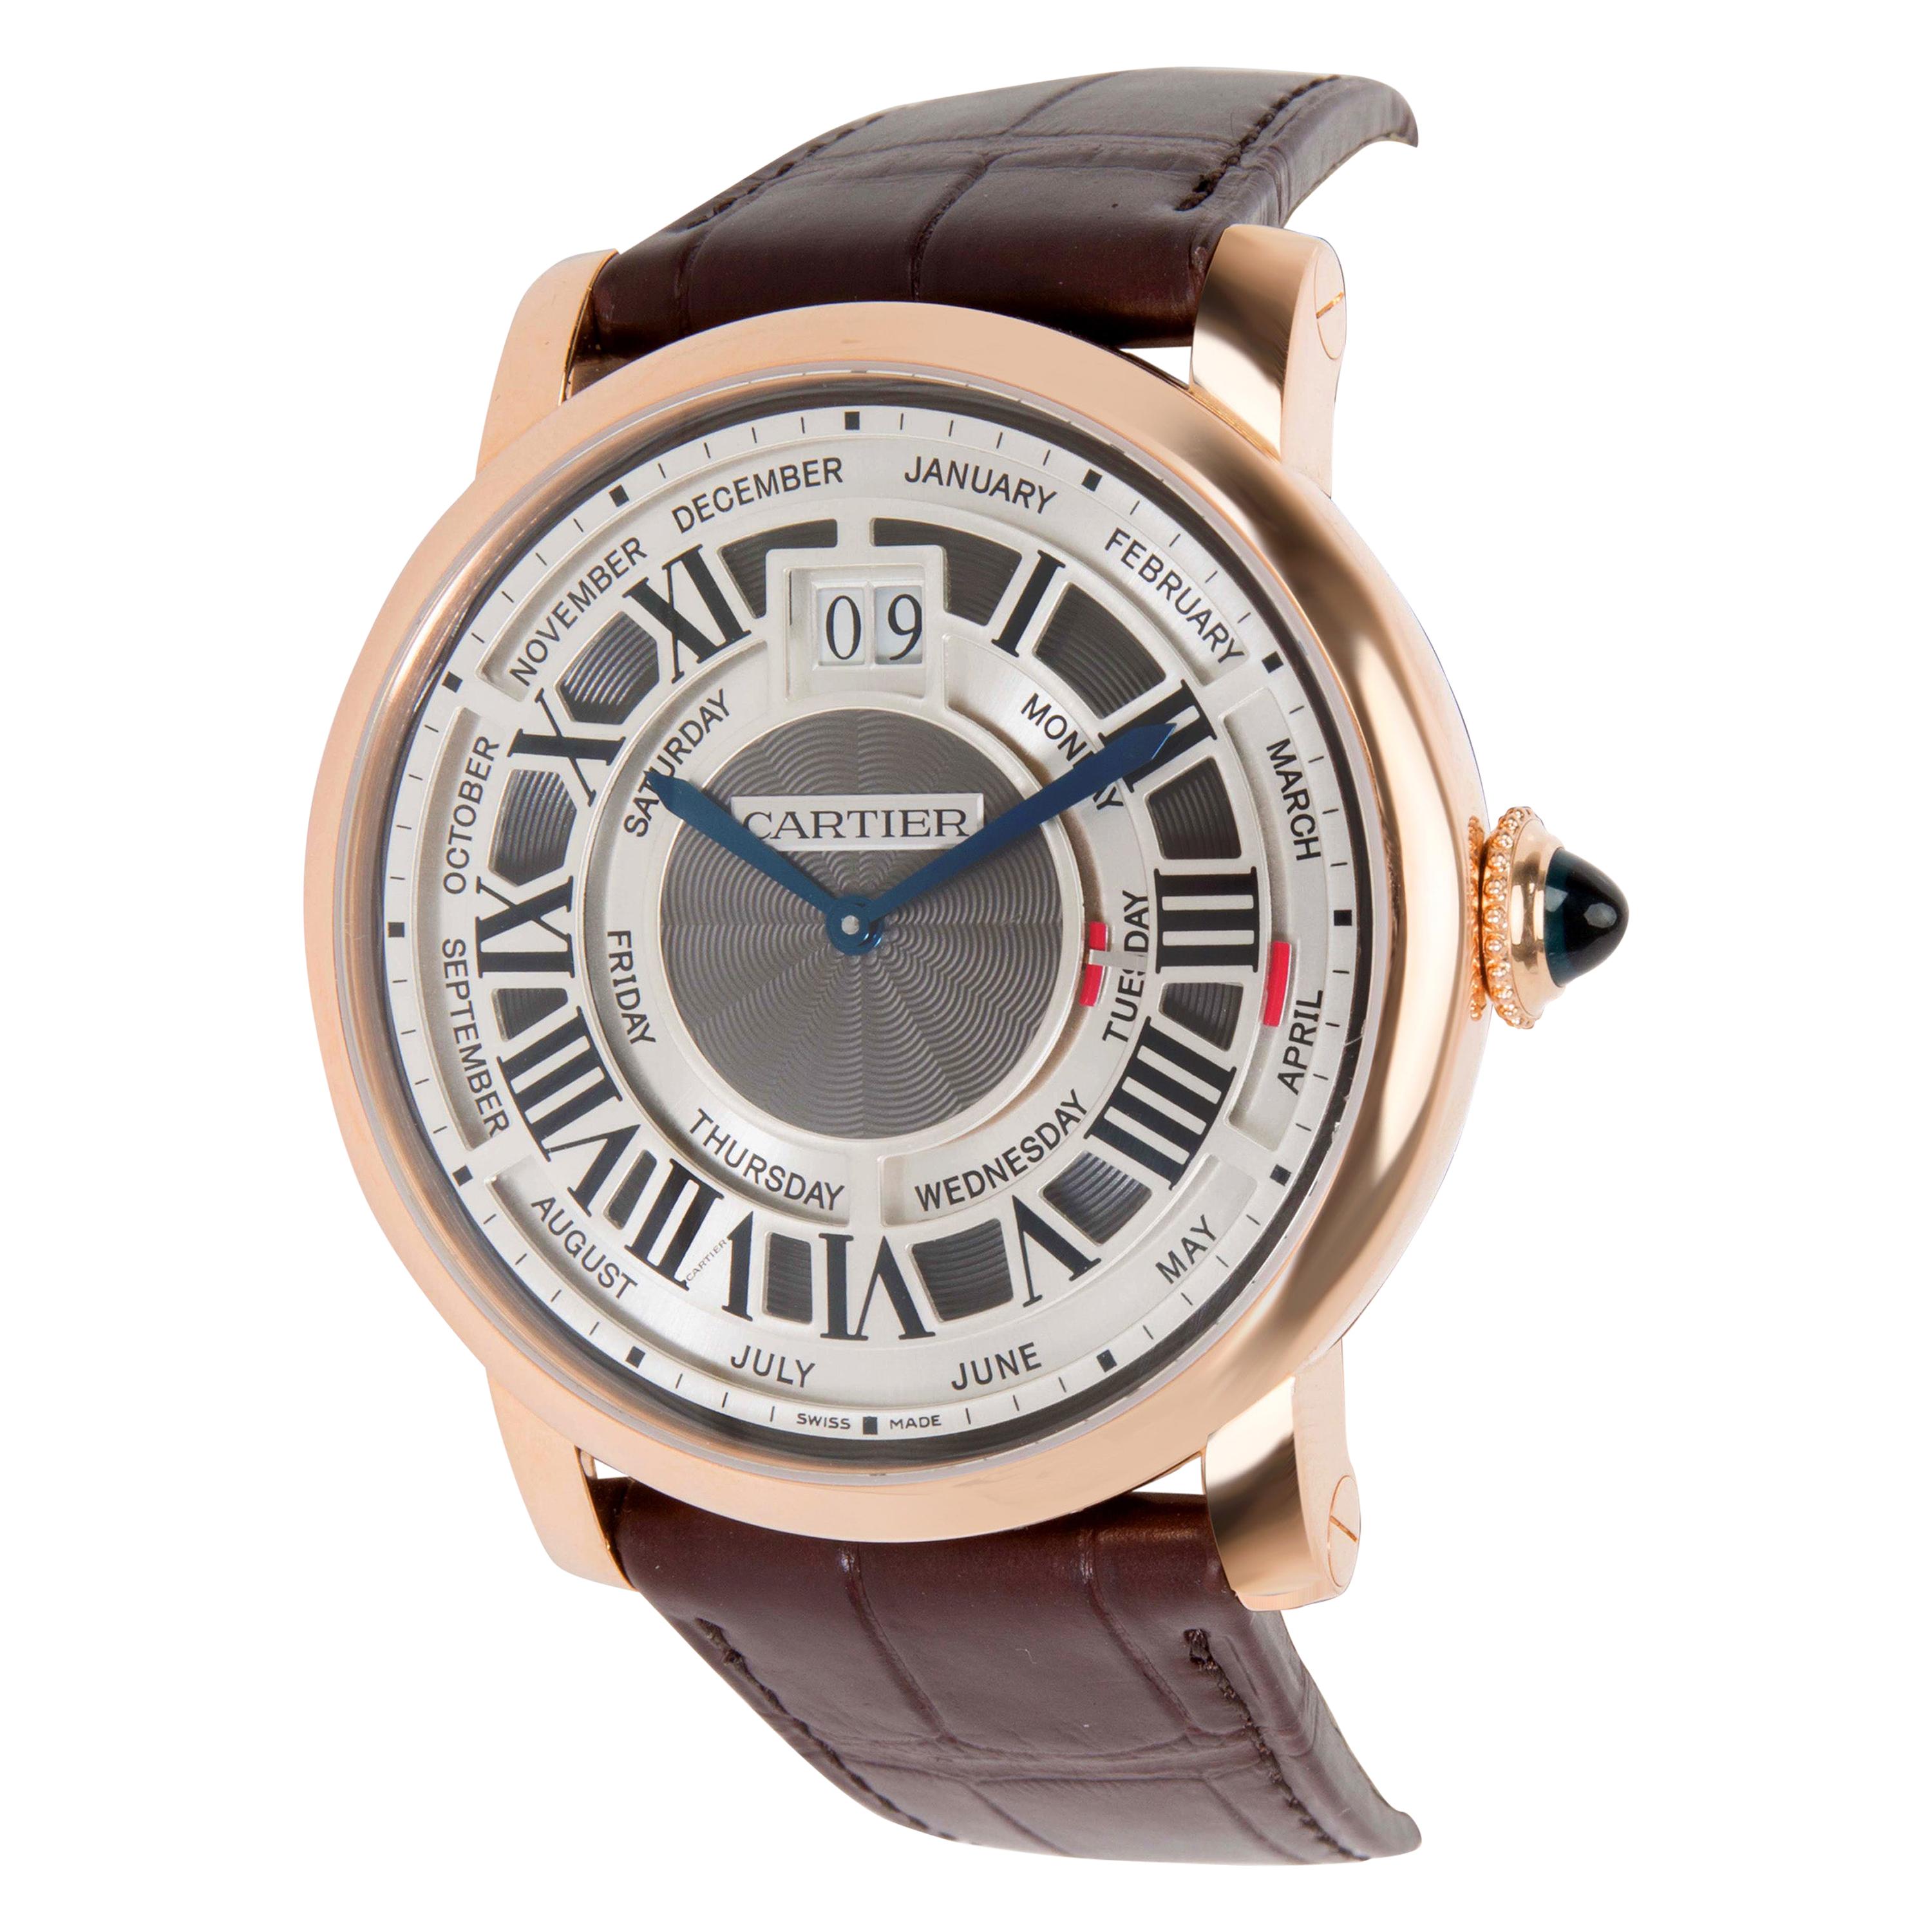 Cartier Rotonde Annual Calendar W1580001 Men's Watch in 18 karat Rose Gold